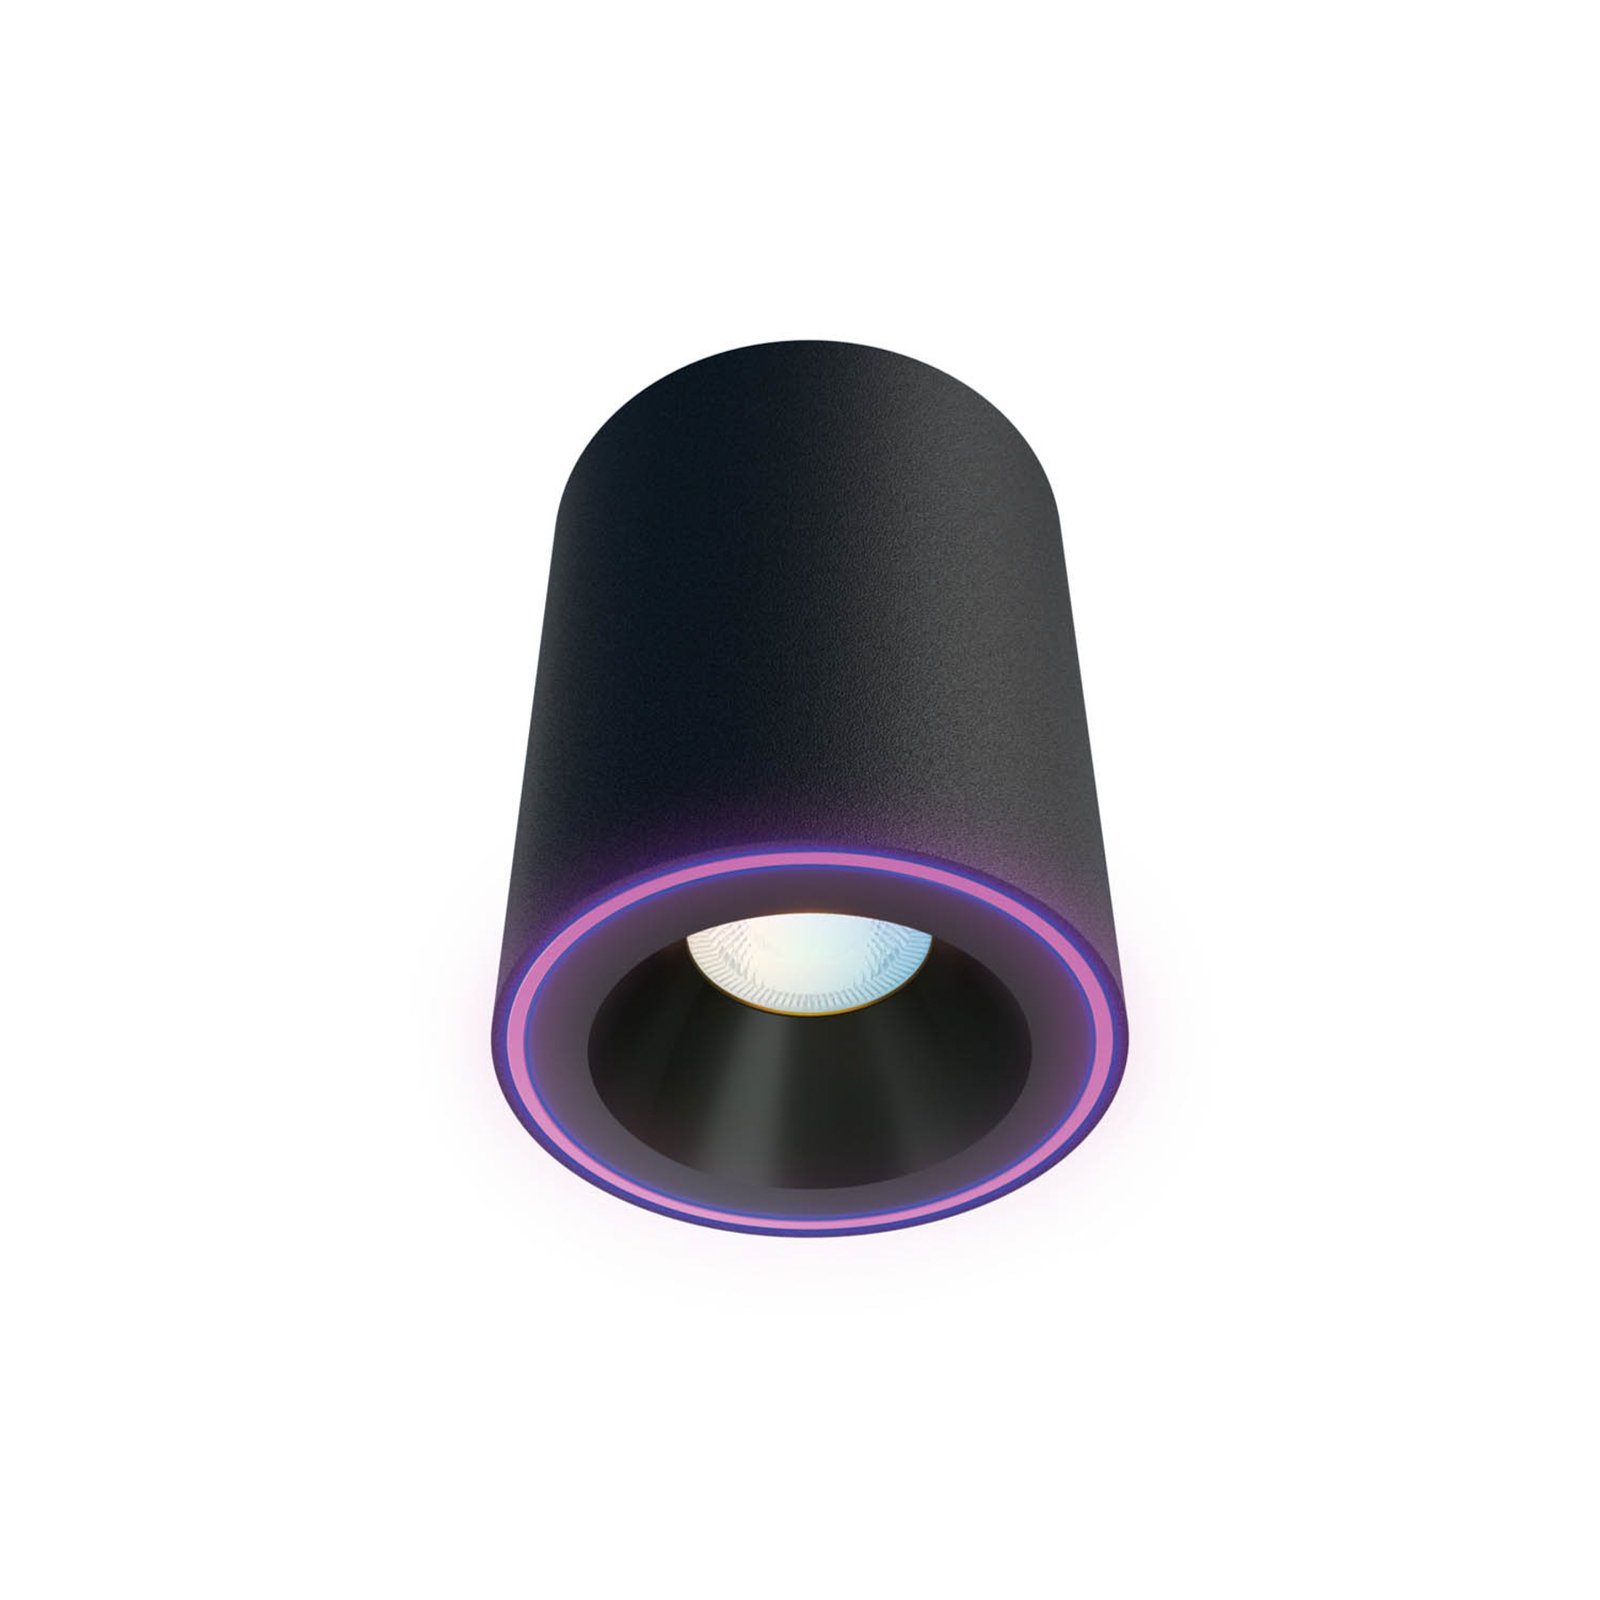 Calex Smart Halo Spot LED spotlámpa, fekete